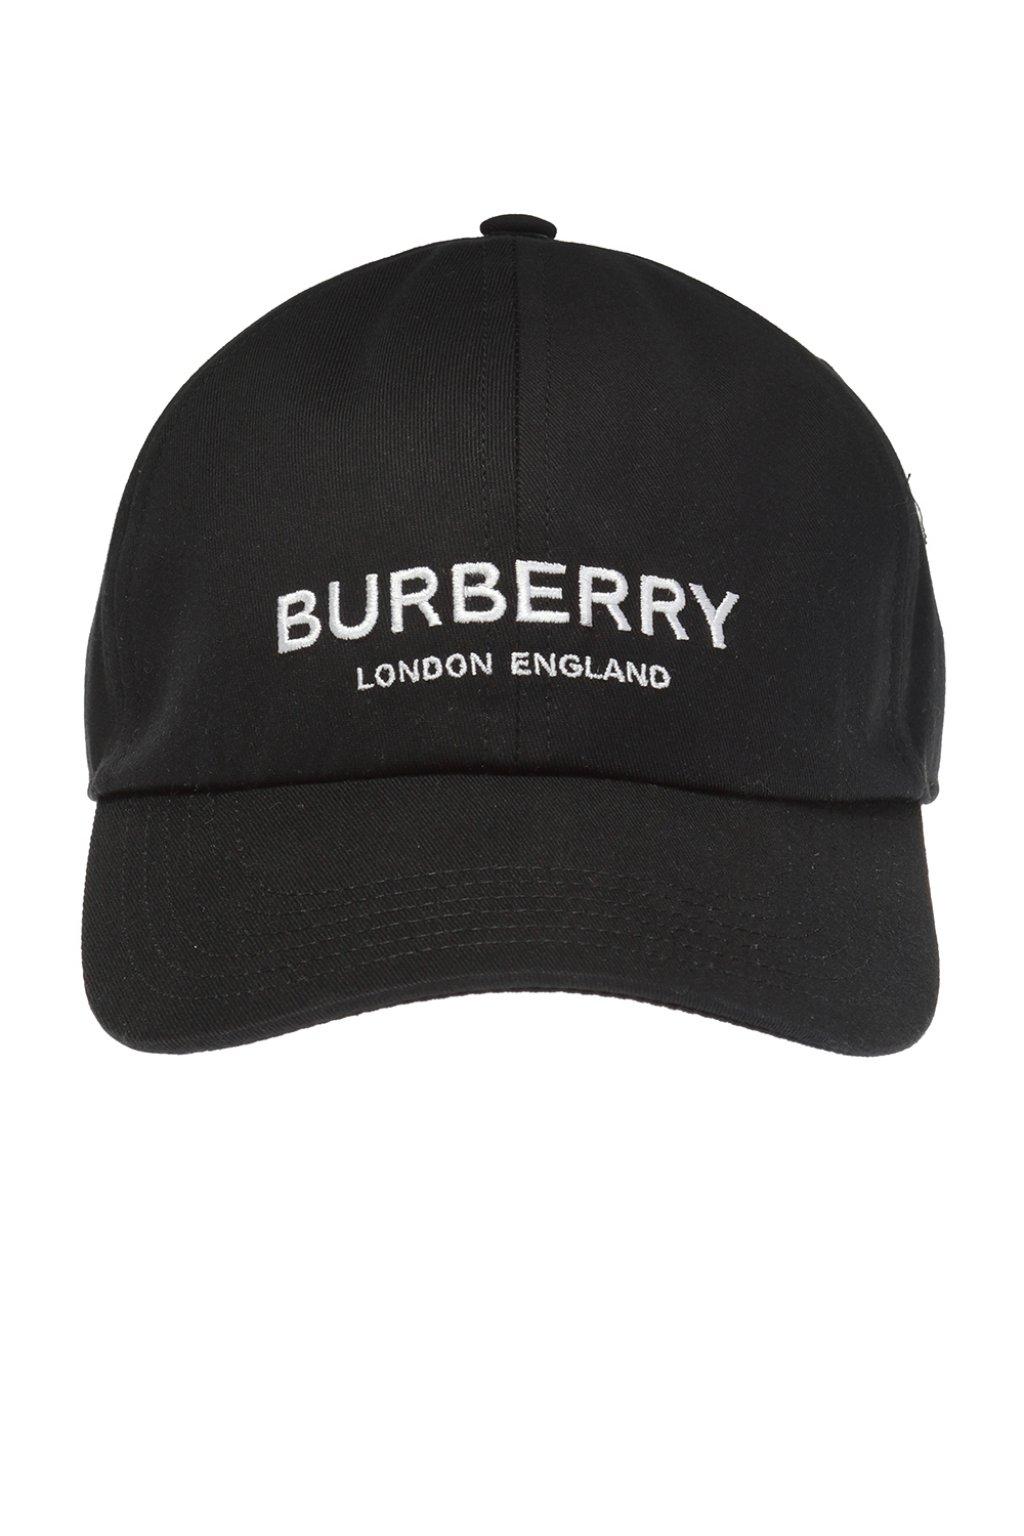 burberry dad hat